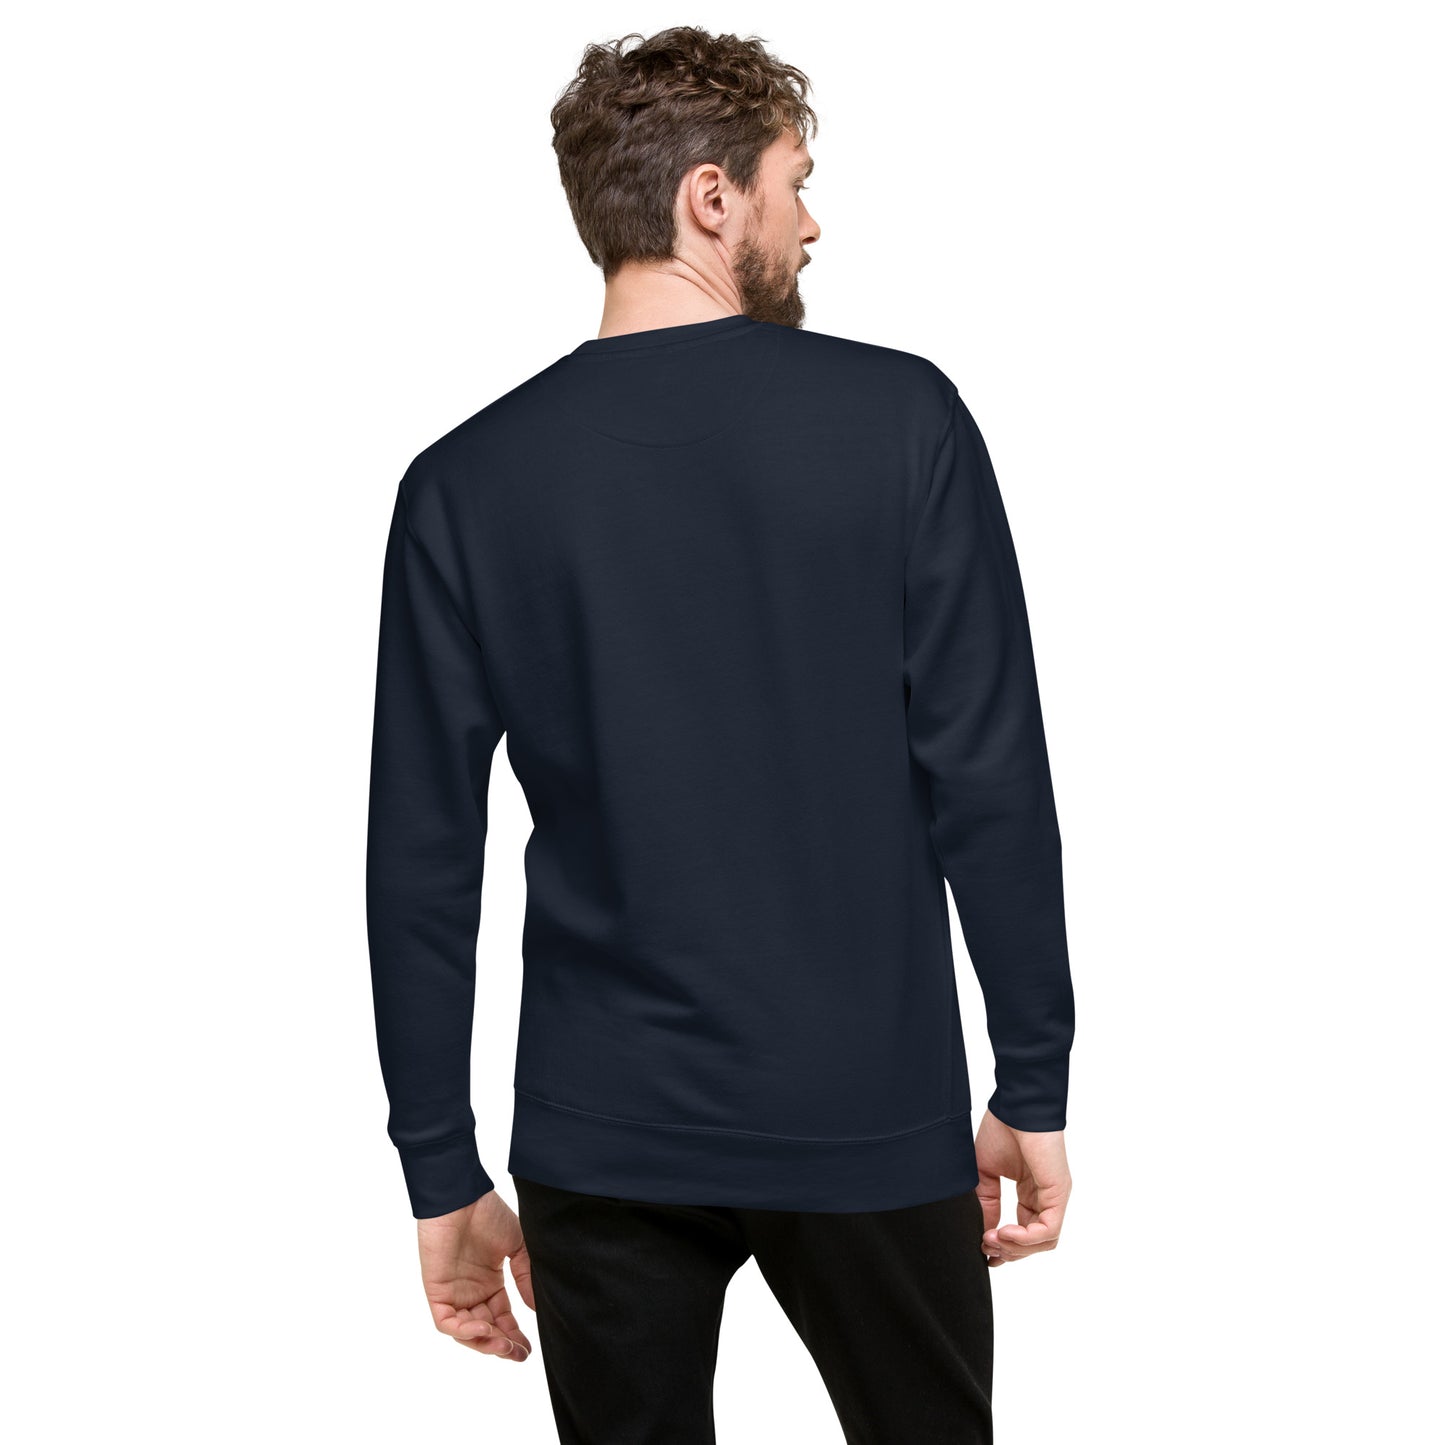 Unisex Premium LionHeart Sweatshirt